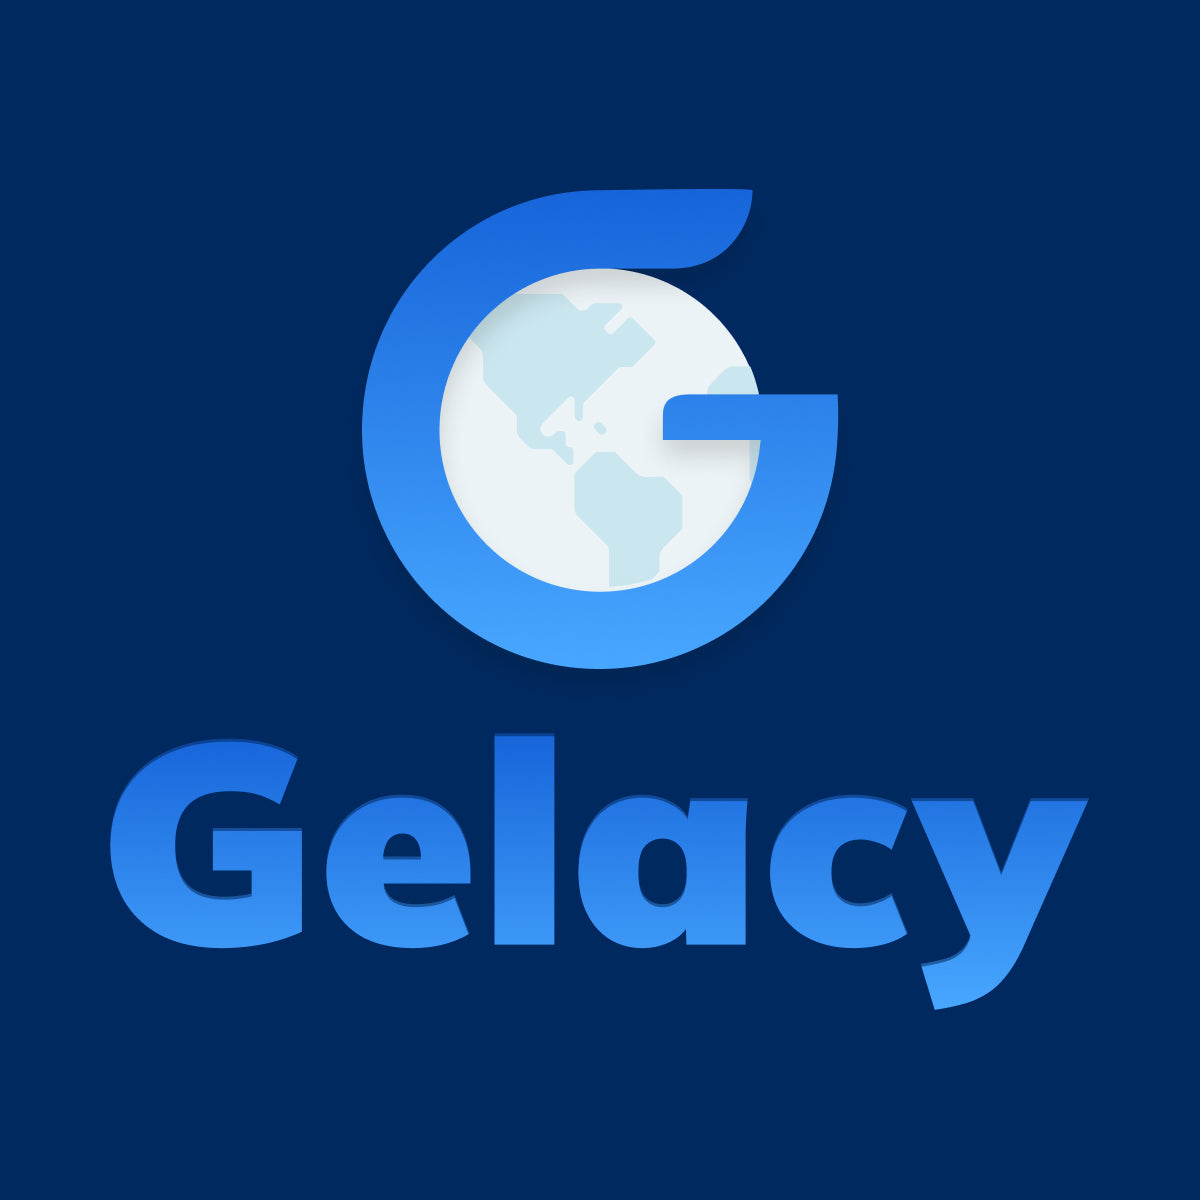 Gelacy ‑ Geolocation & Markets